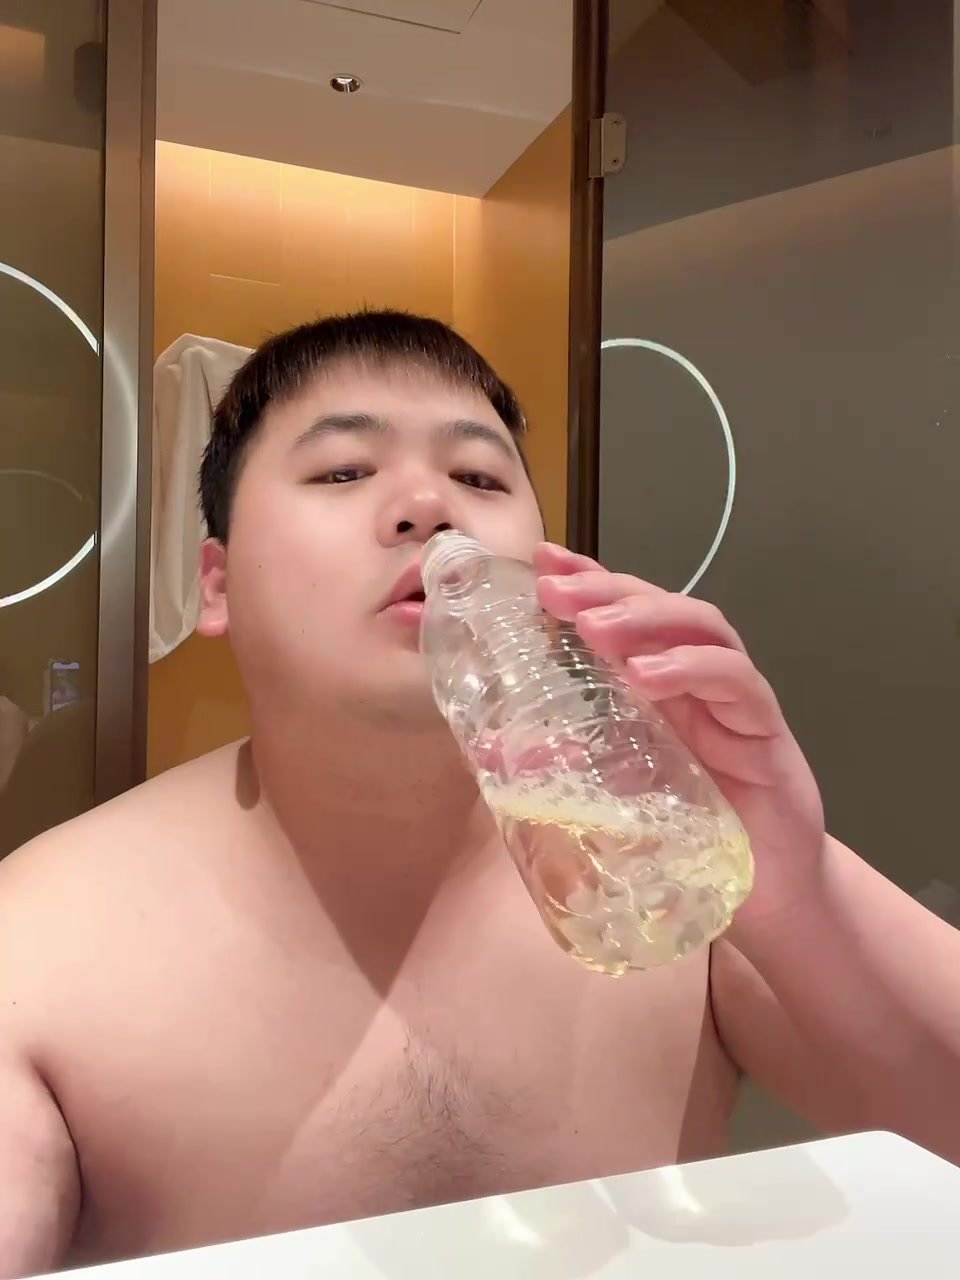 Pig Boy Kam pisses in a bottle a drinks it up!